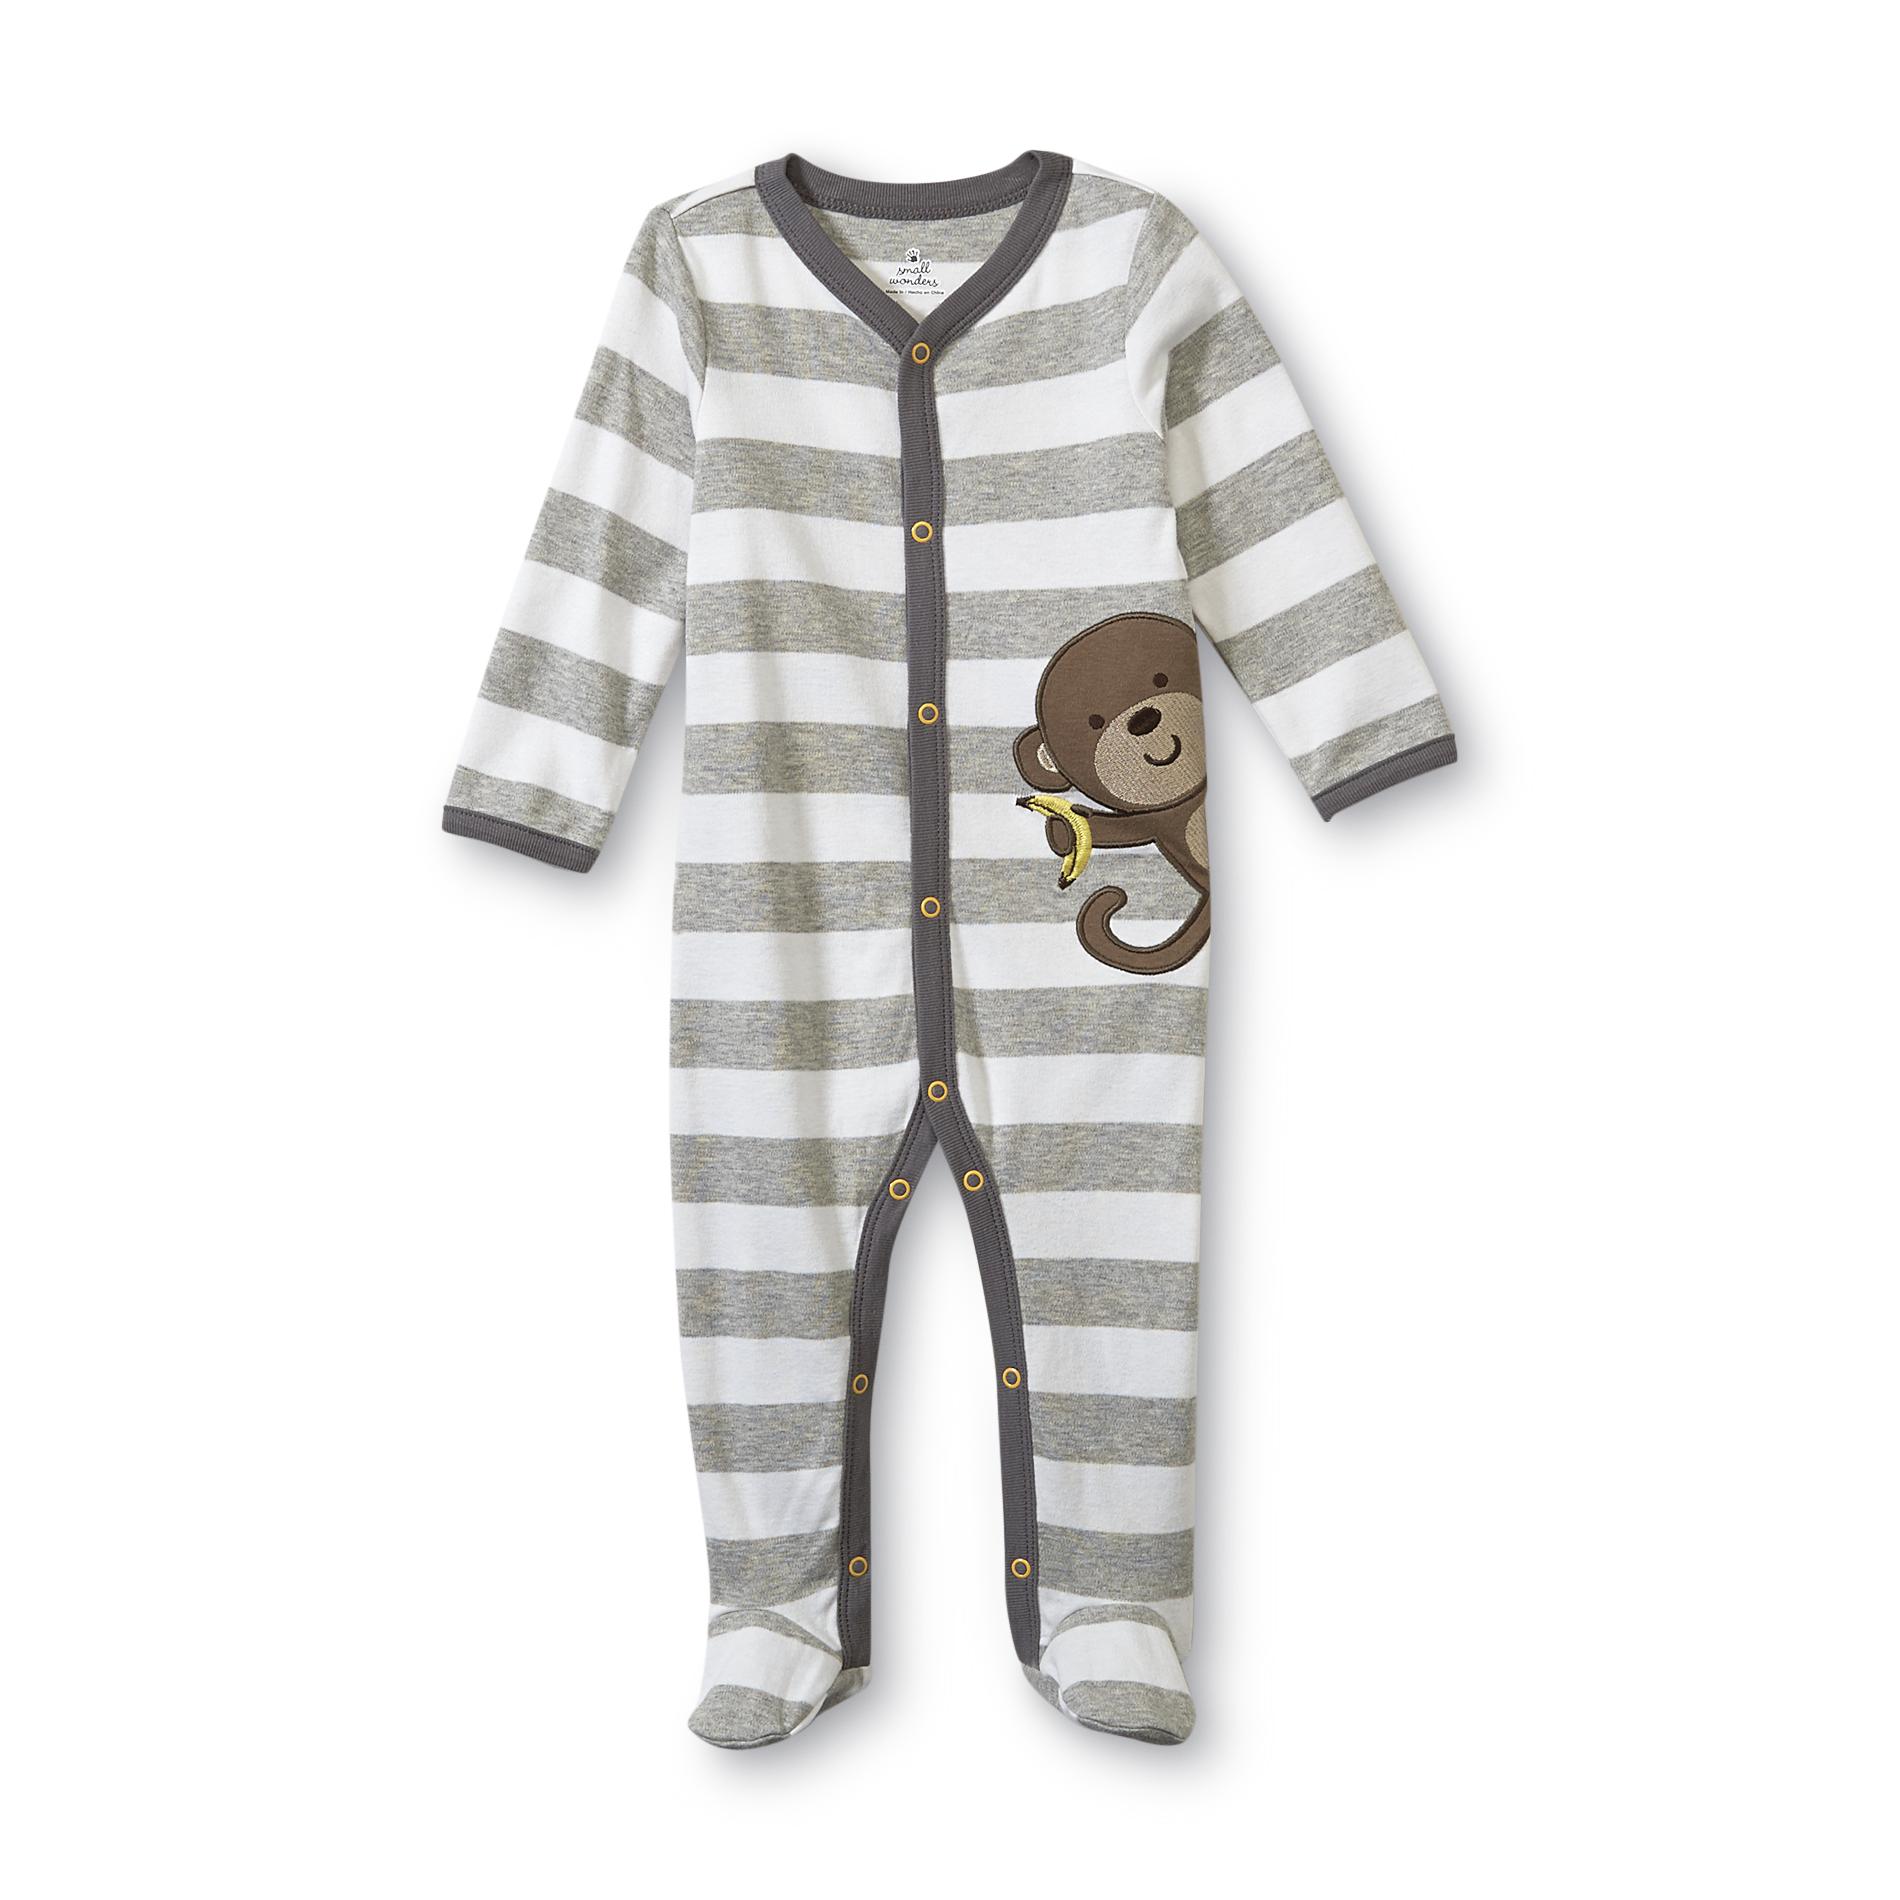 Small Wonders Newborn Boy's Bodysuit - Monkey & Striped